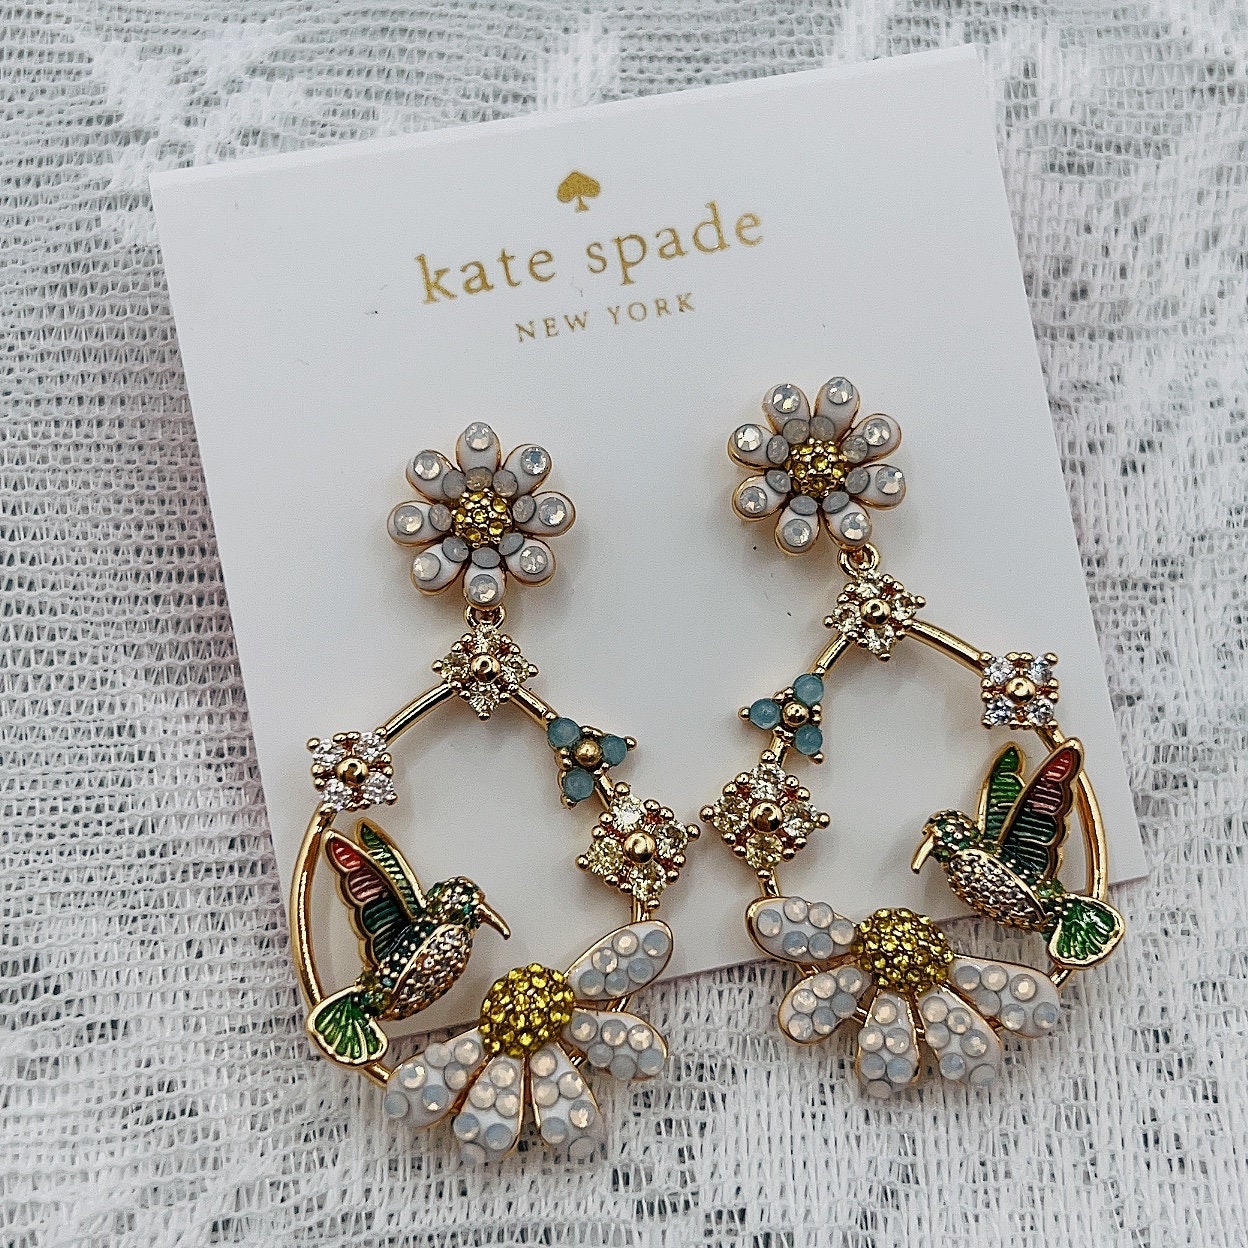 Valentine's Day jewelry deals: Shop Pandora, Kate Spade, Blue Nile